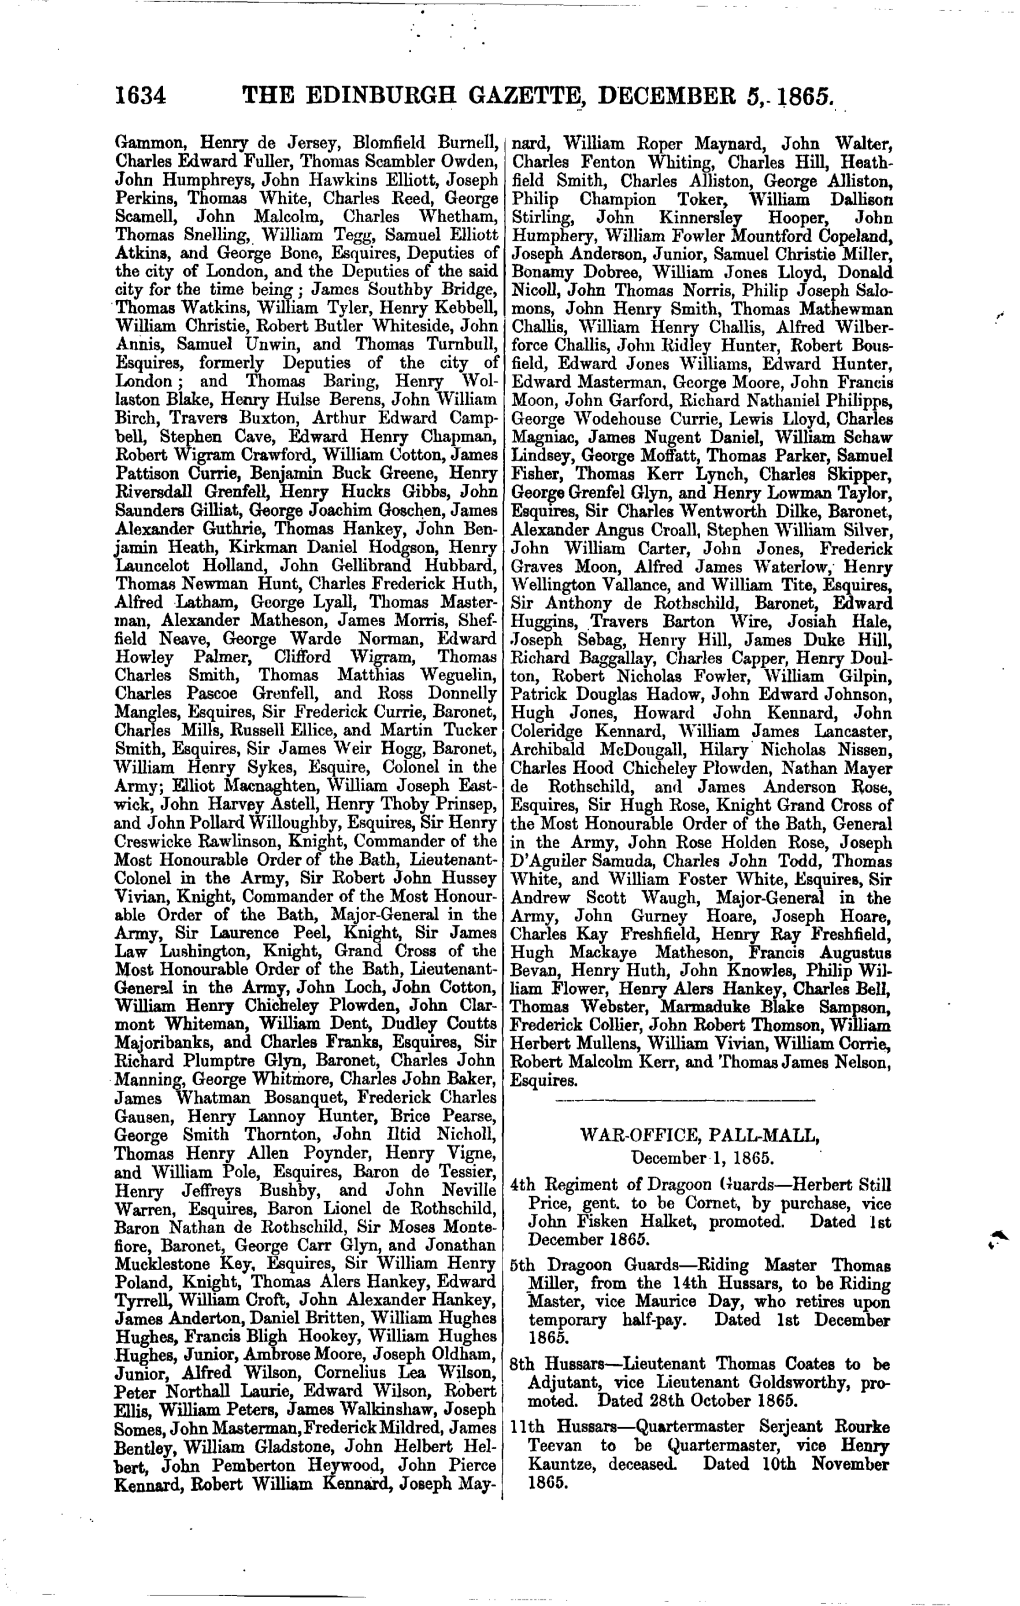 1634 the Edinburgh Gazette, December 5,-1865